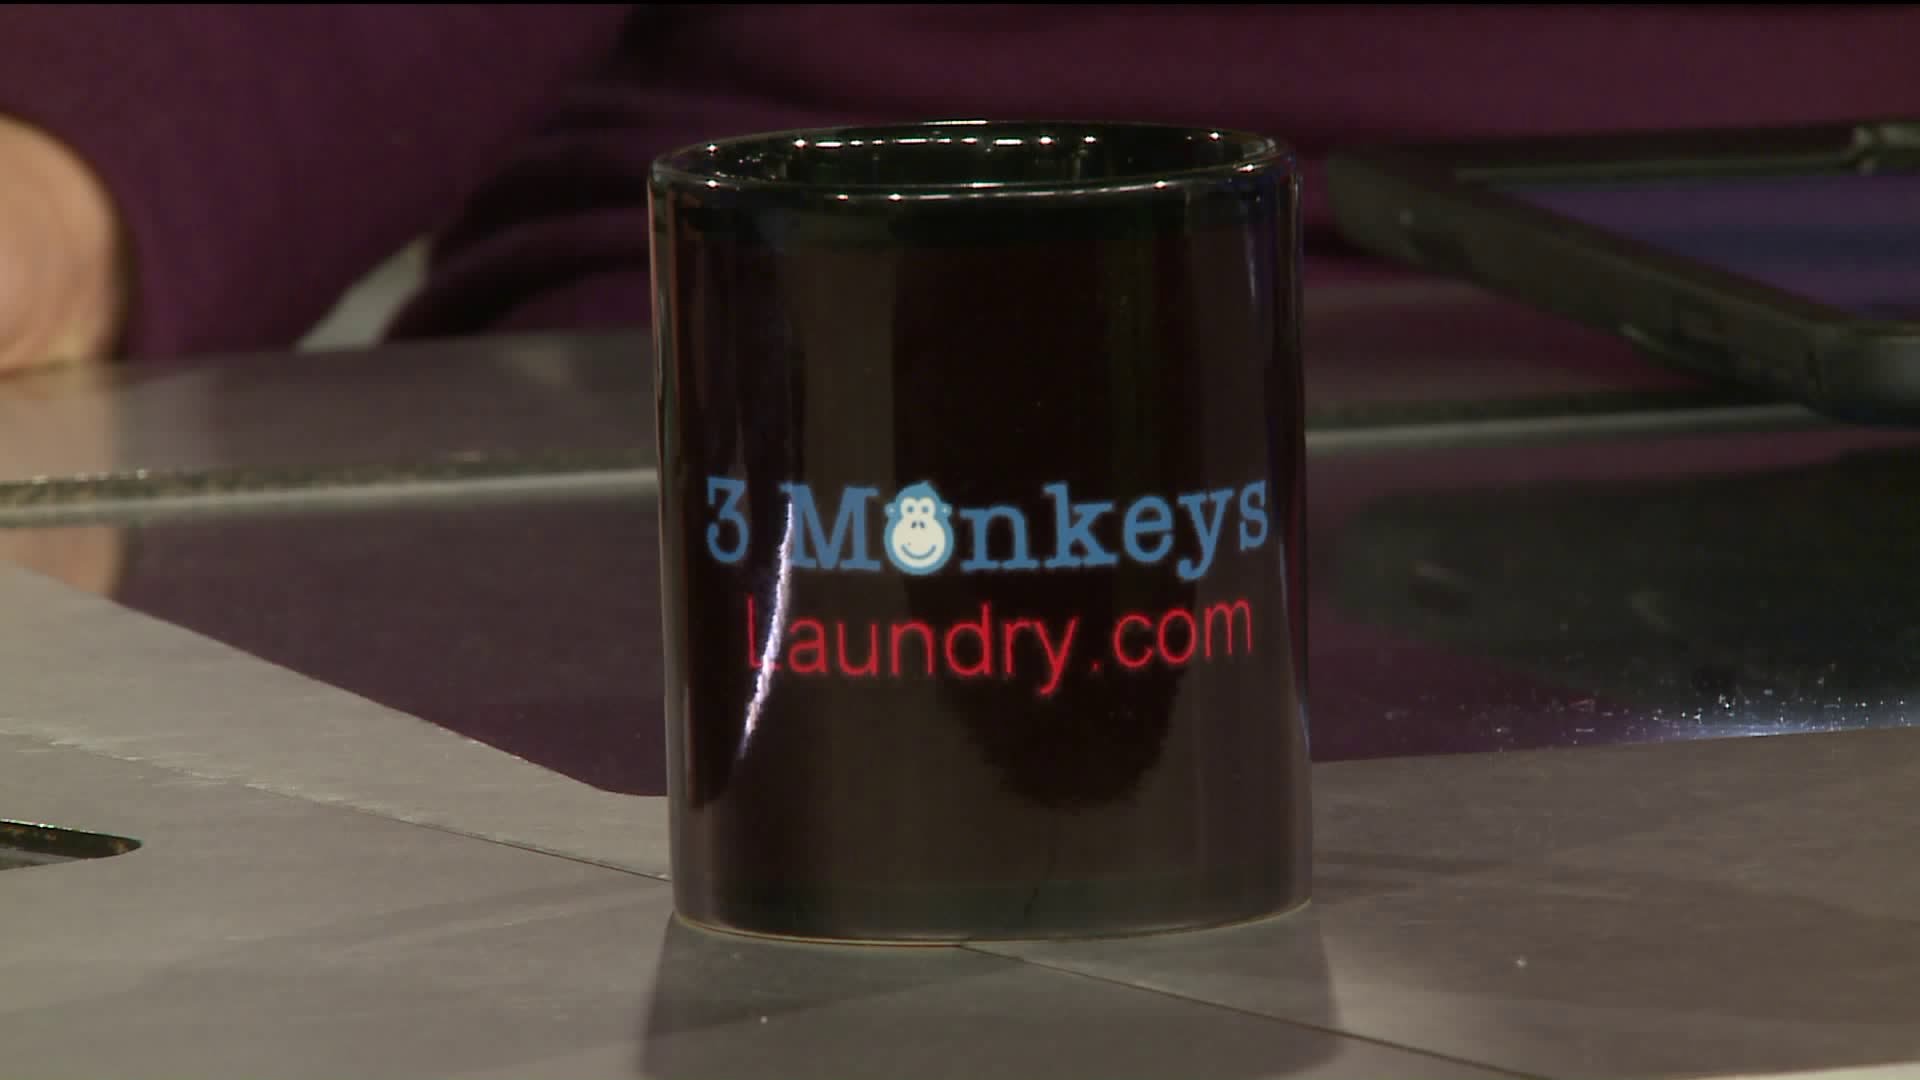 3 Monkeys laundry